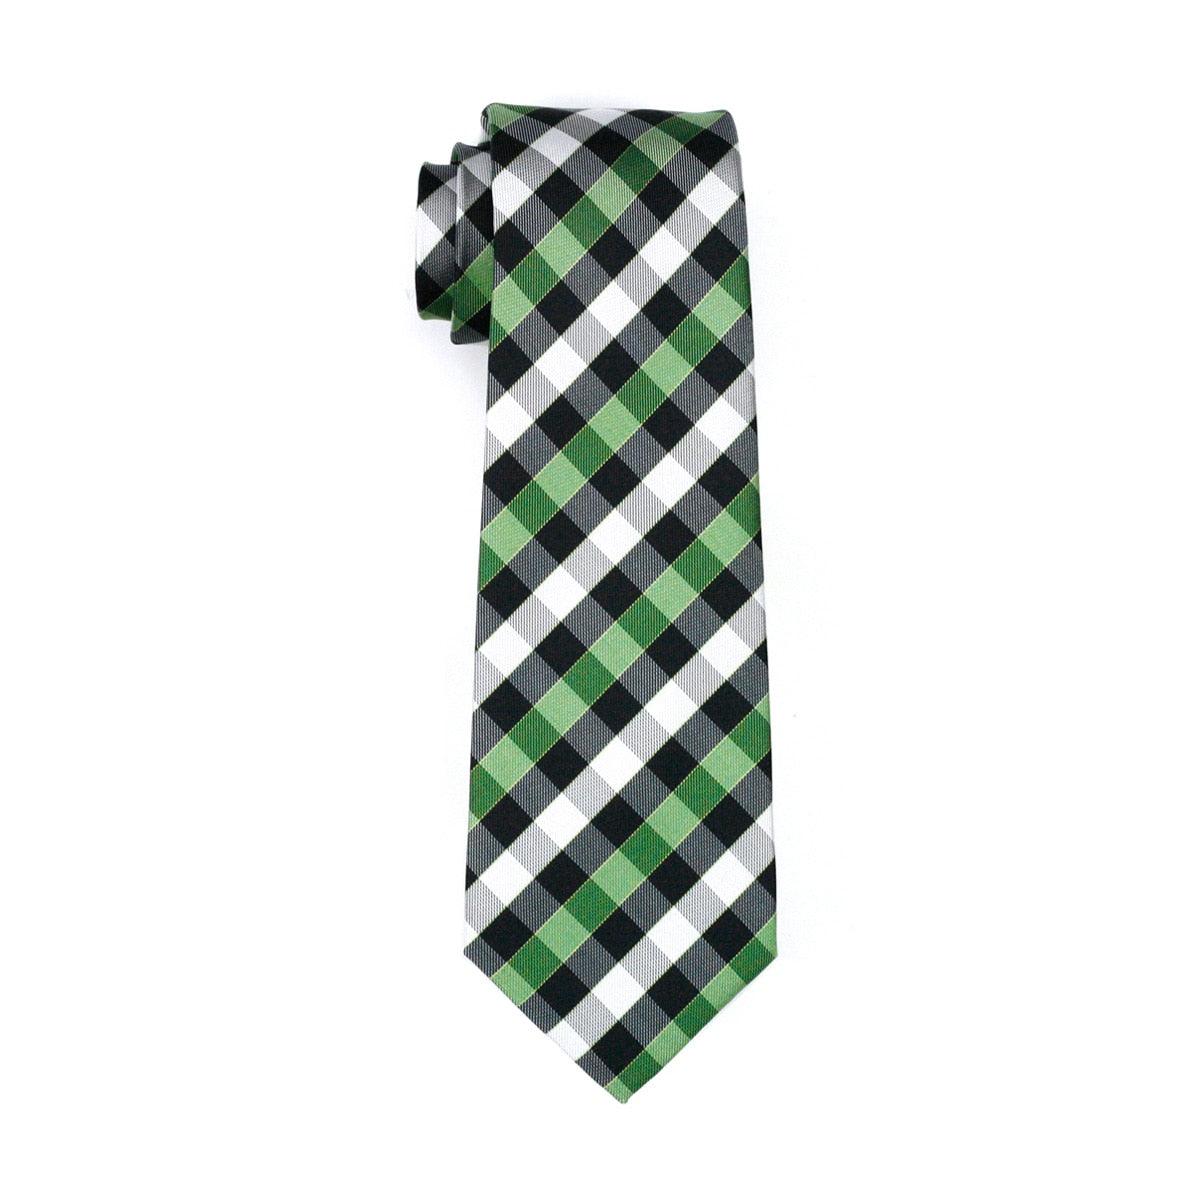 Men's Tie White & Black &Green Plaid Silk Jacquard Woven classical Tie- Hanky Cufflinks Set (2U17)